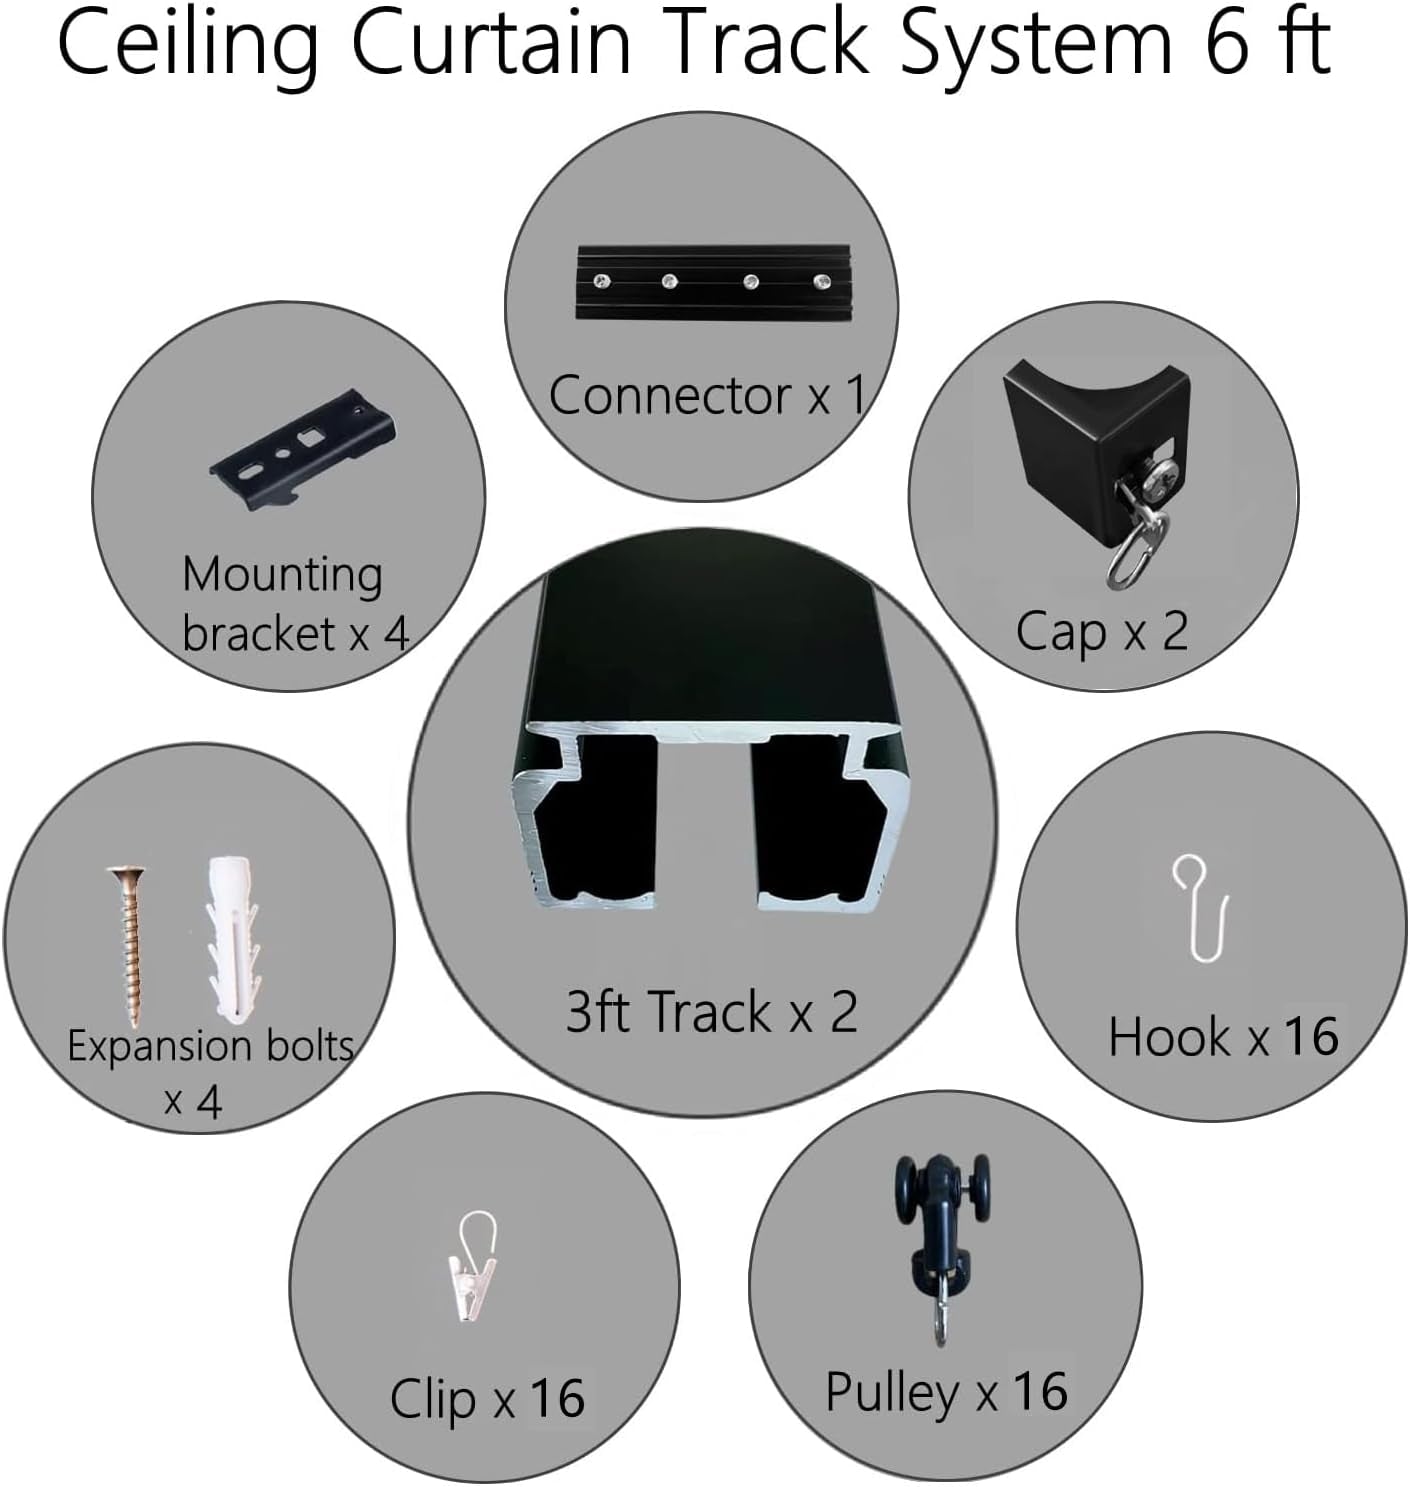 Ceiling Curtain Track, Curtain Track Ceiling Mount, Ceiling Track for Curtains, Room Divider Curtain Track, Curtain Track Ceiling Wall Mount, Curtain Track Rail with Roller Hooks for 3Ft - 6Ft, Black